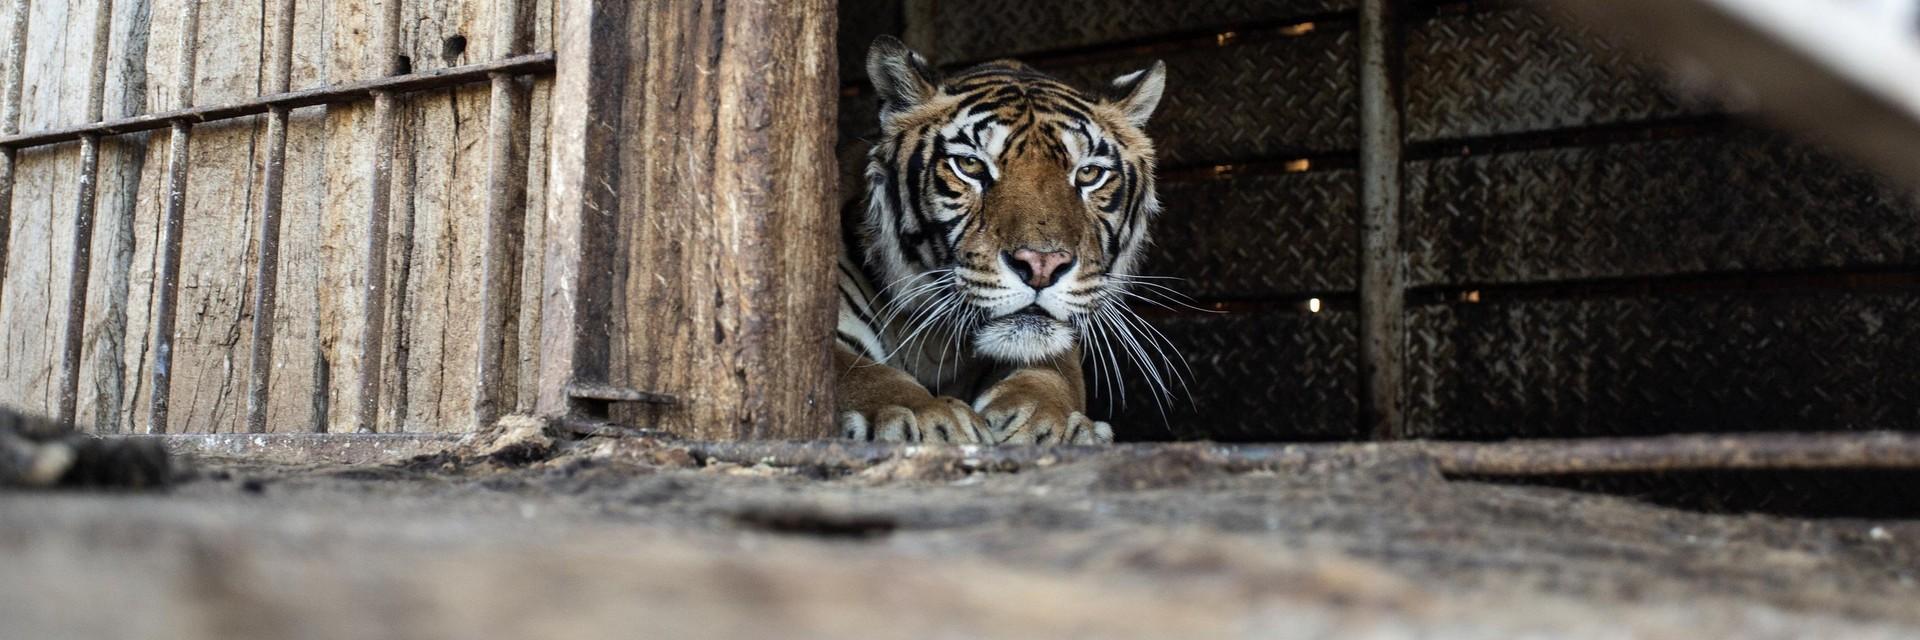 Abandoned Tiger